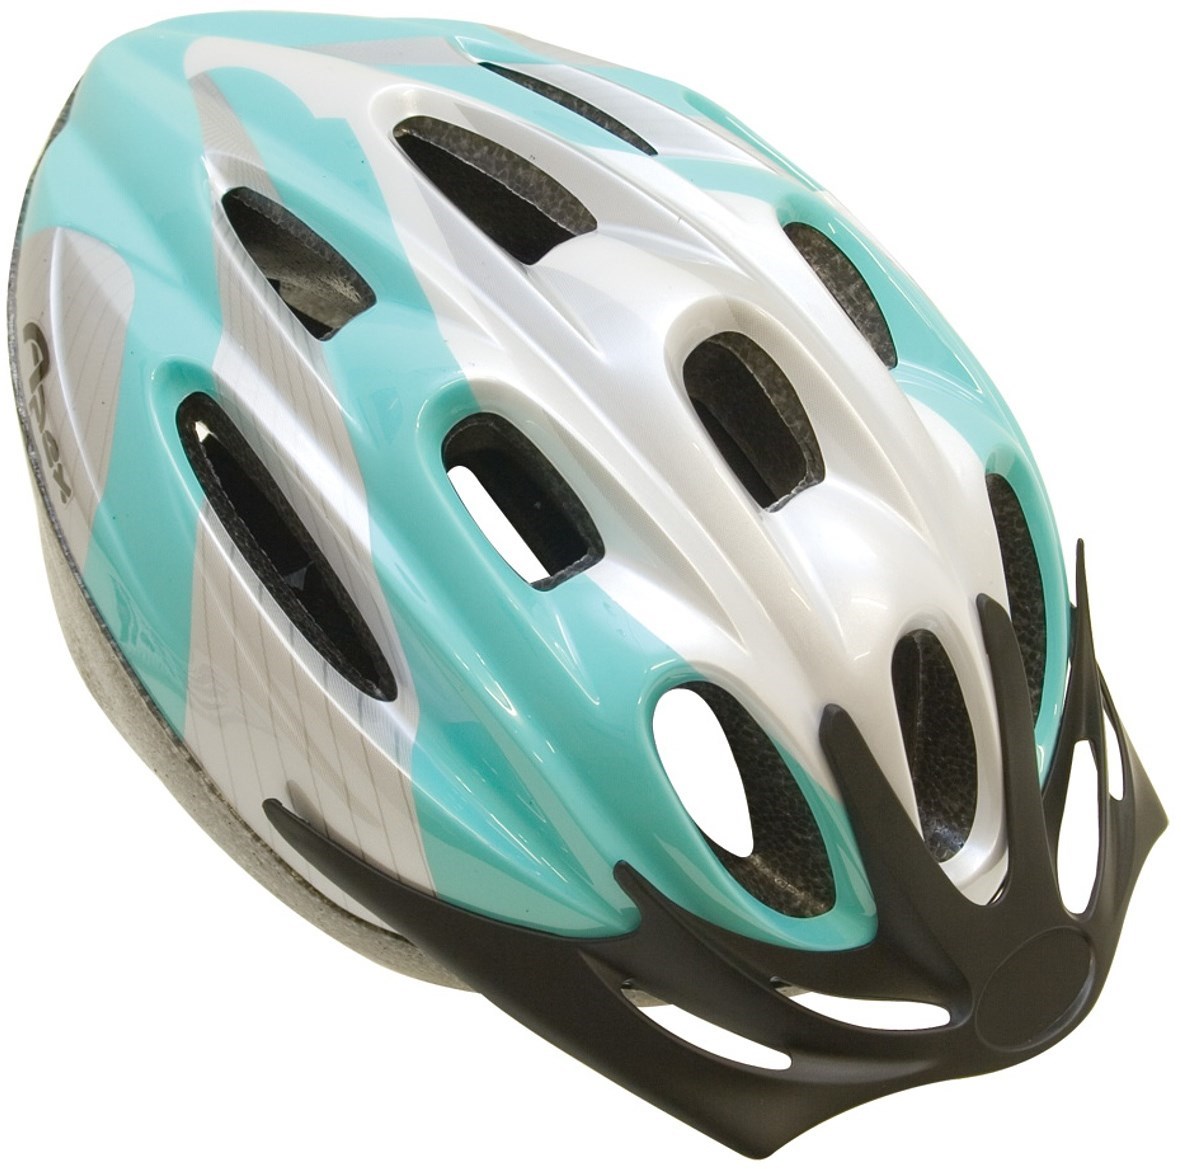 Apex Zephyr Helmet product image